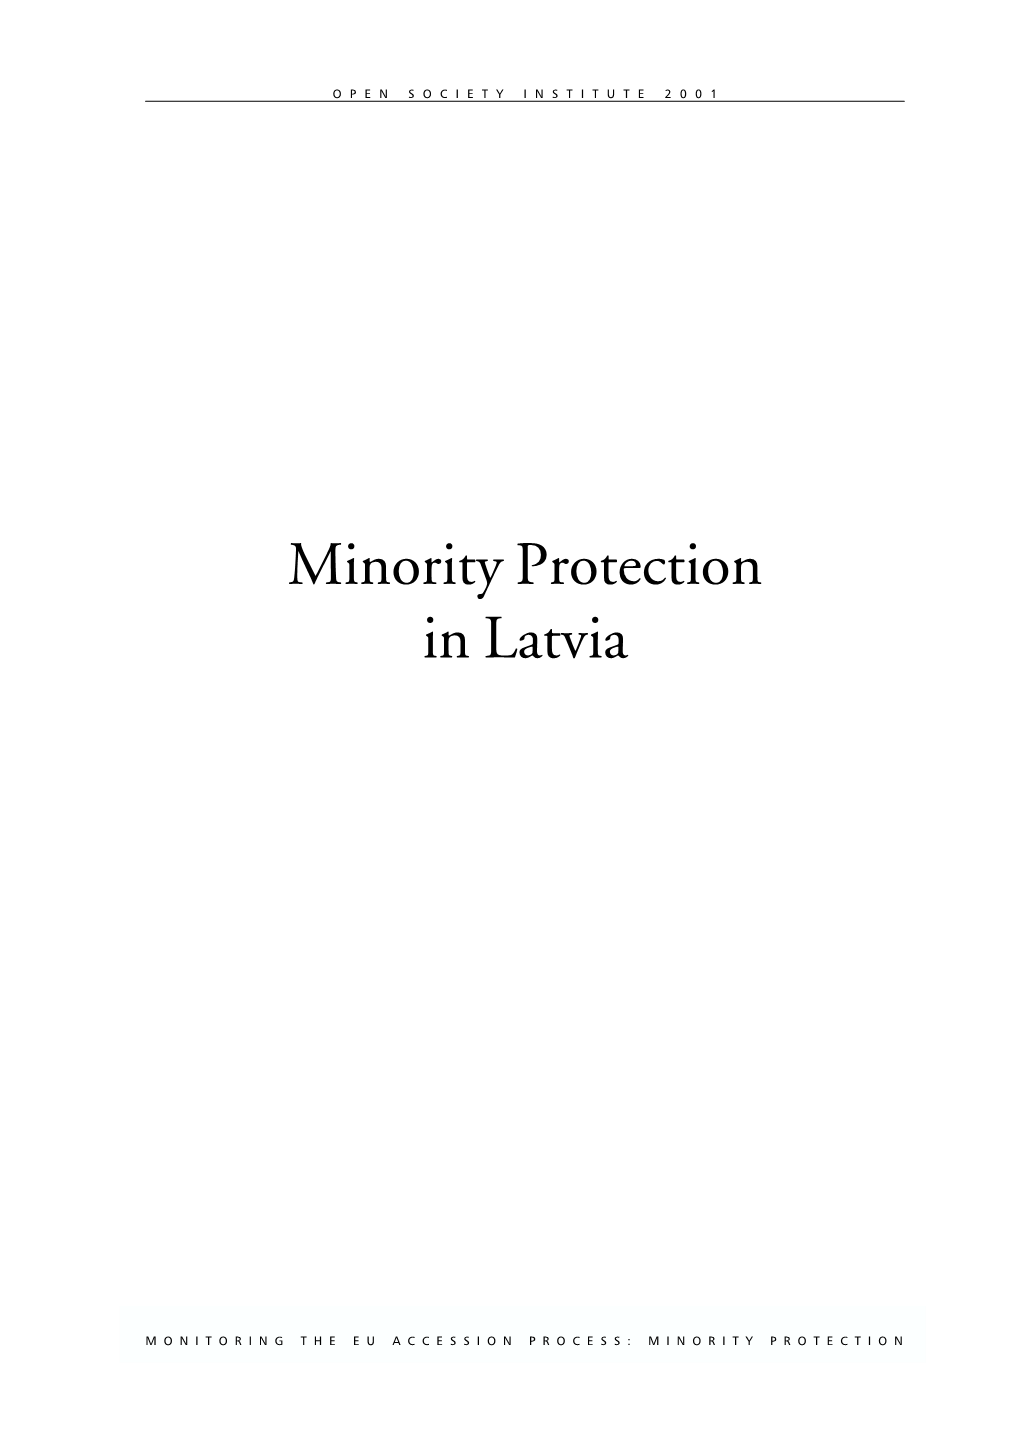 Minority Protection in Latvia